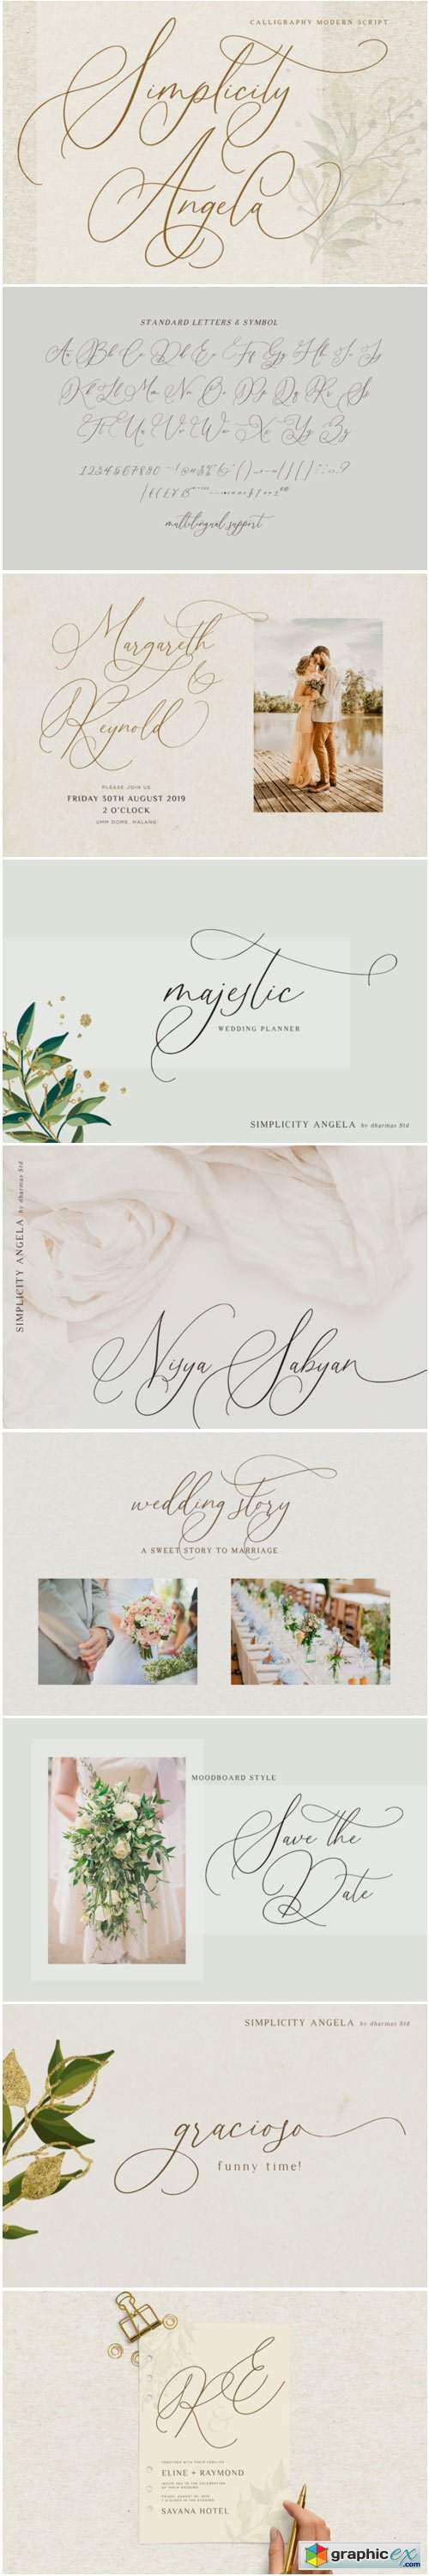 Simplicity Angela Font